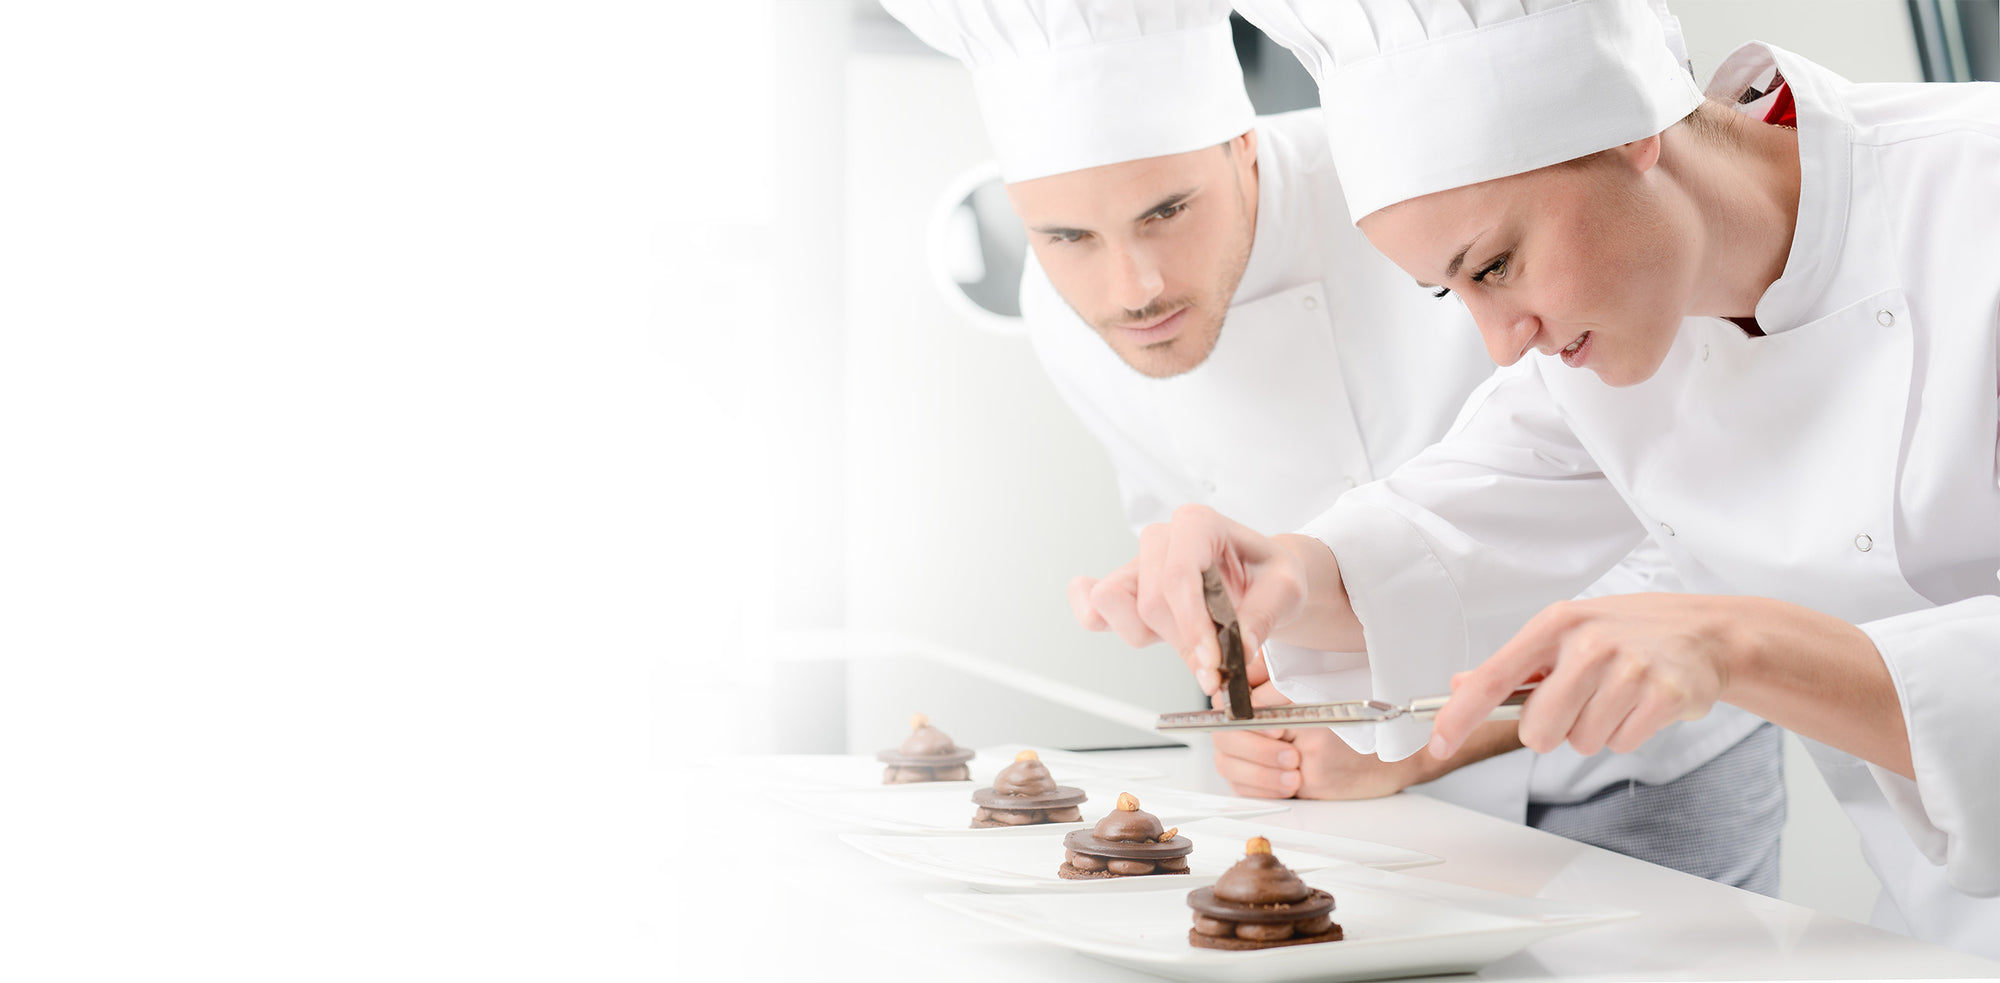 Two Chocolate Chefs creating sweet desert